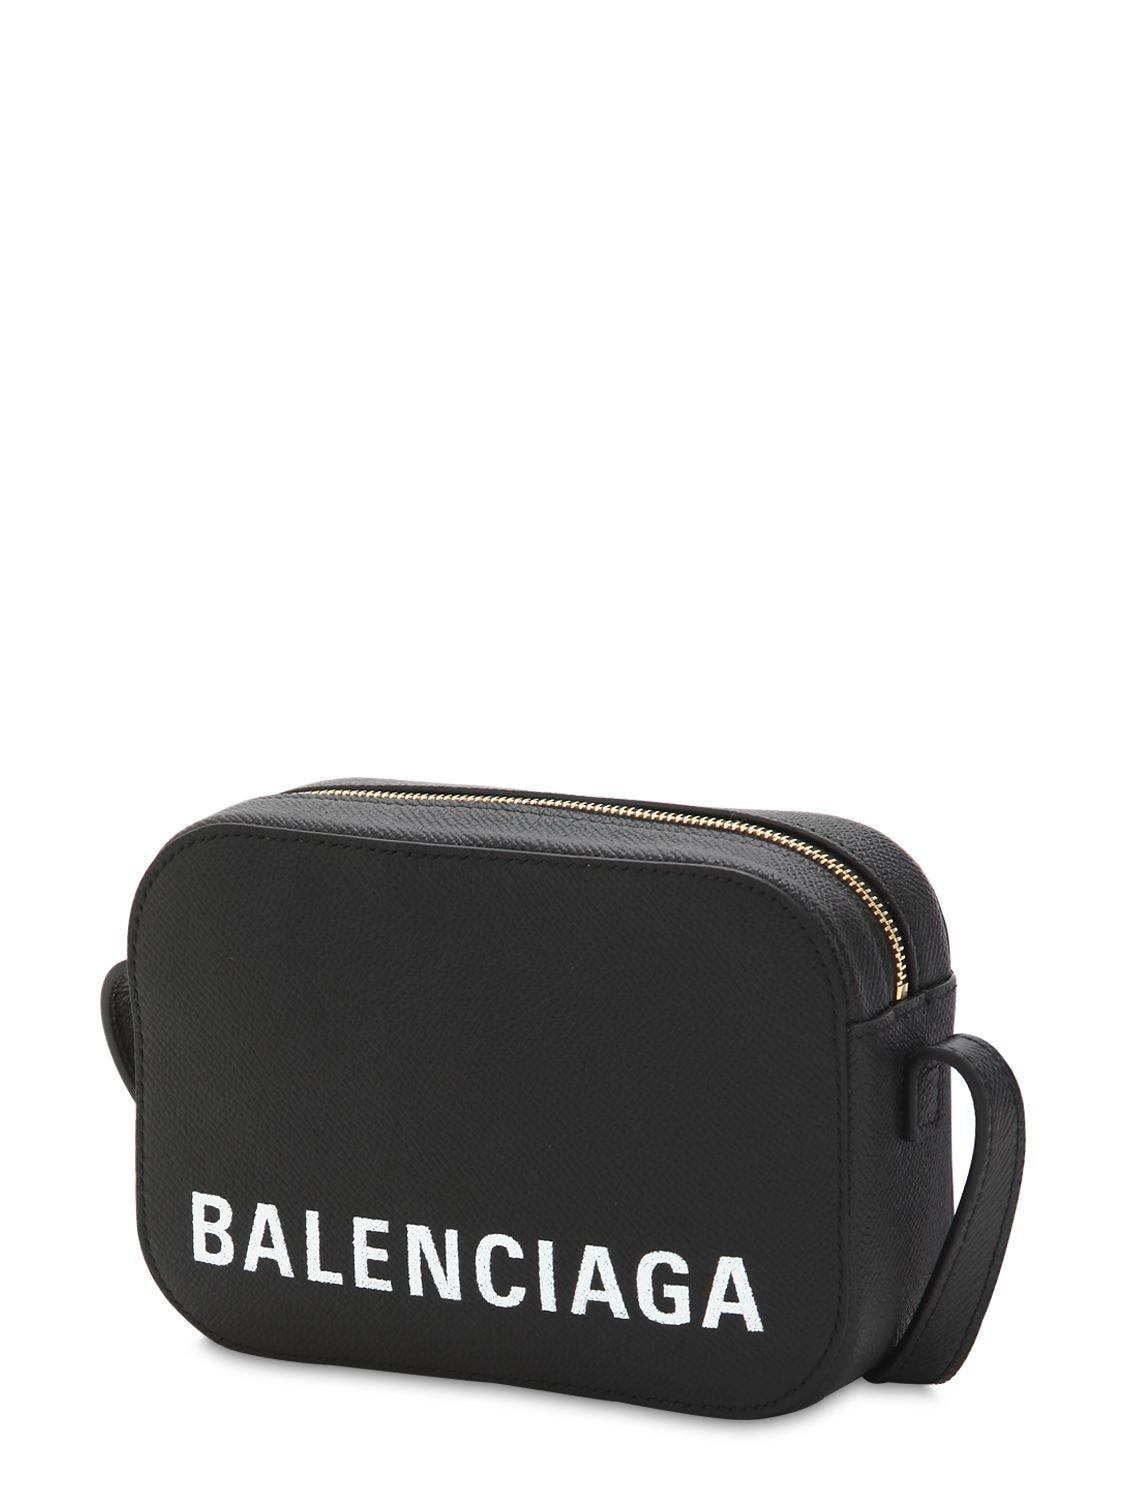 Balenciaga Leather Ville Camera Bag Xs in Black/White (Black) | Lyst